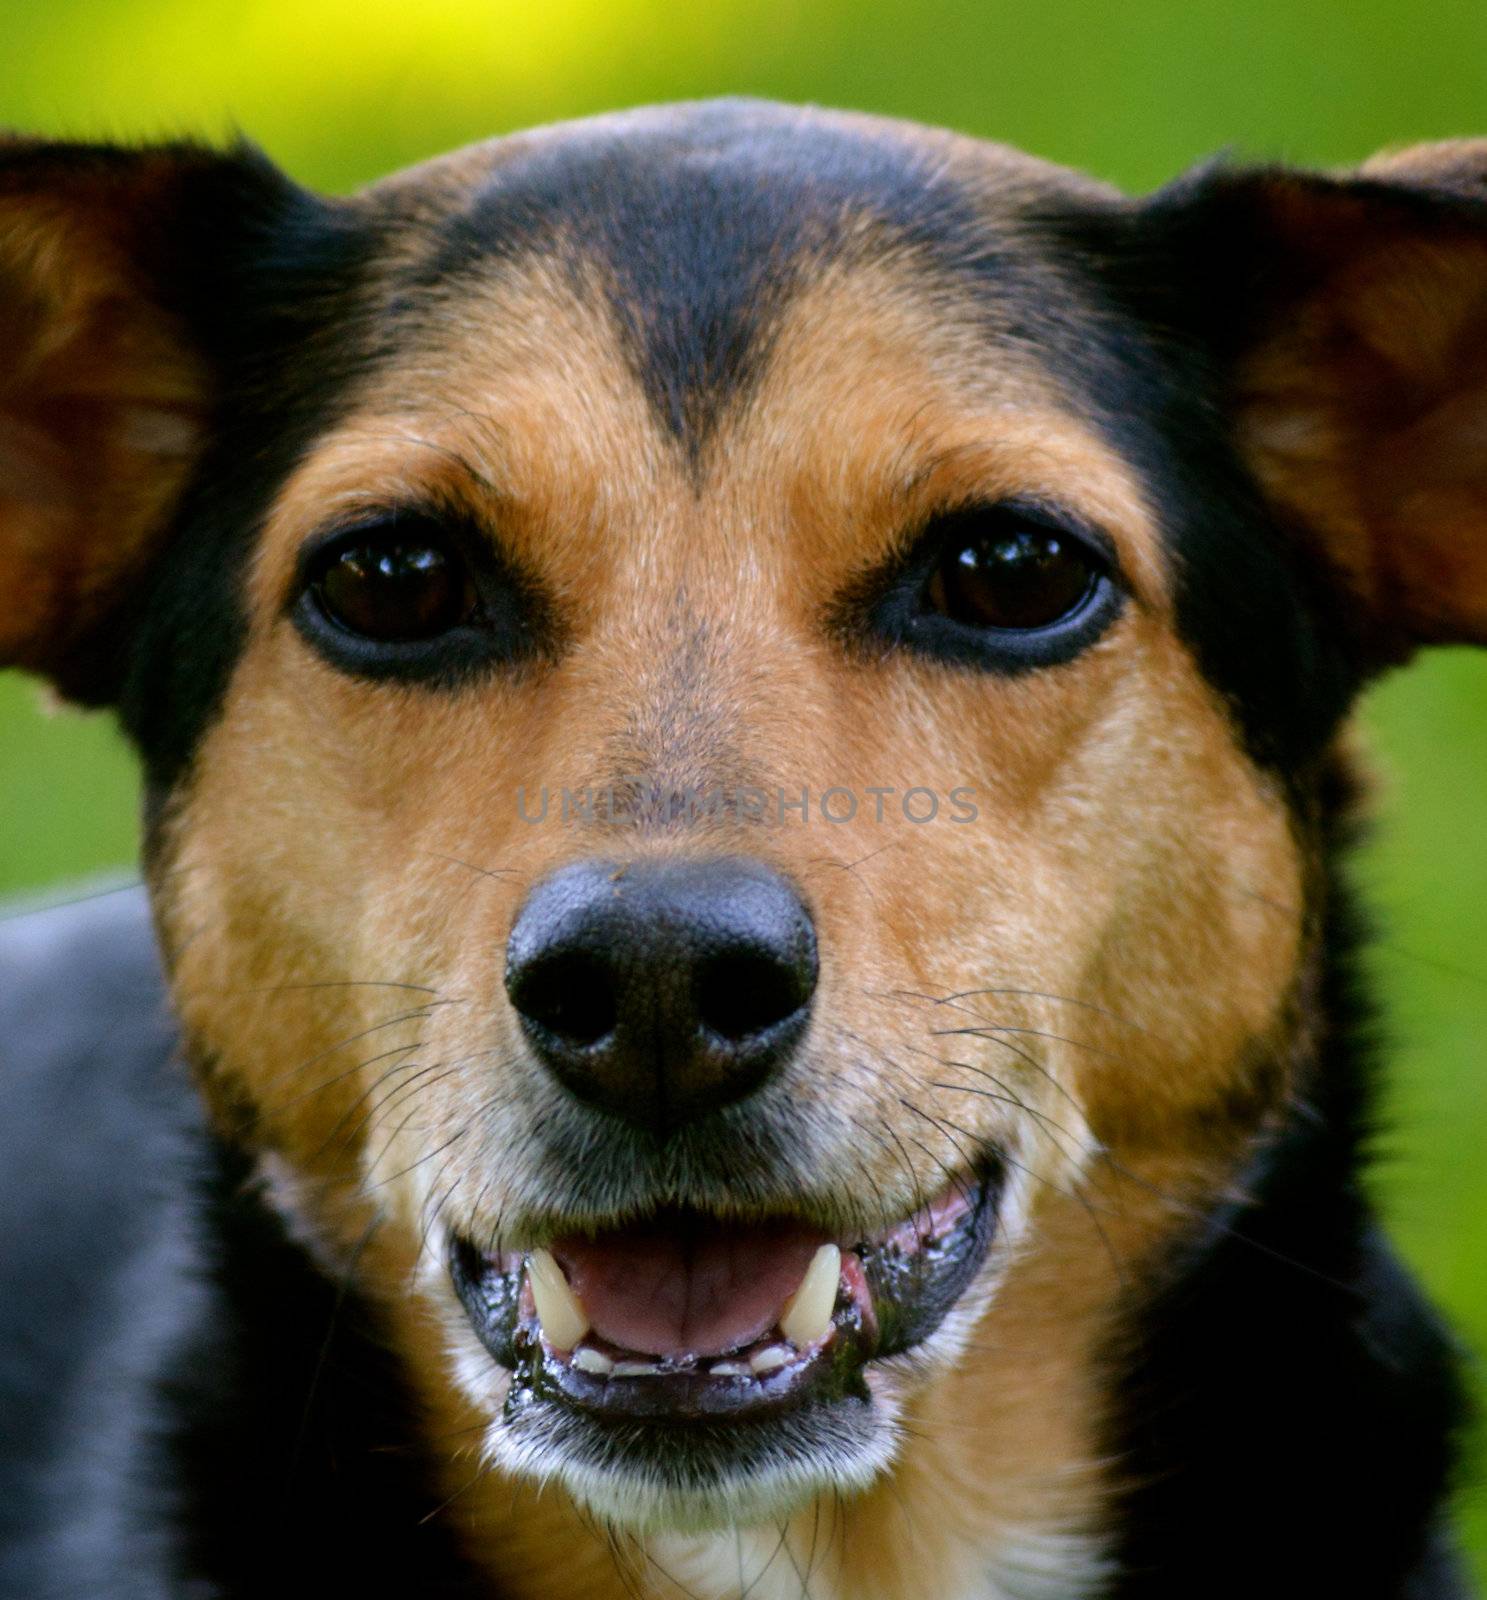 Meagle - Min-Pin Beagle Mixed Breed Dog